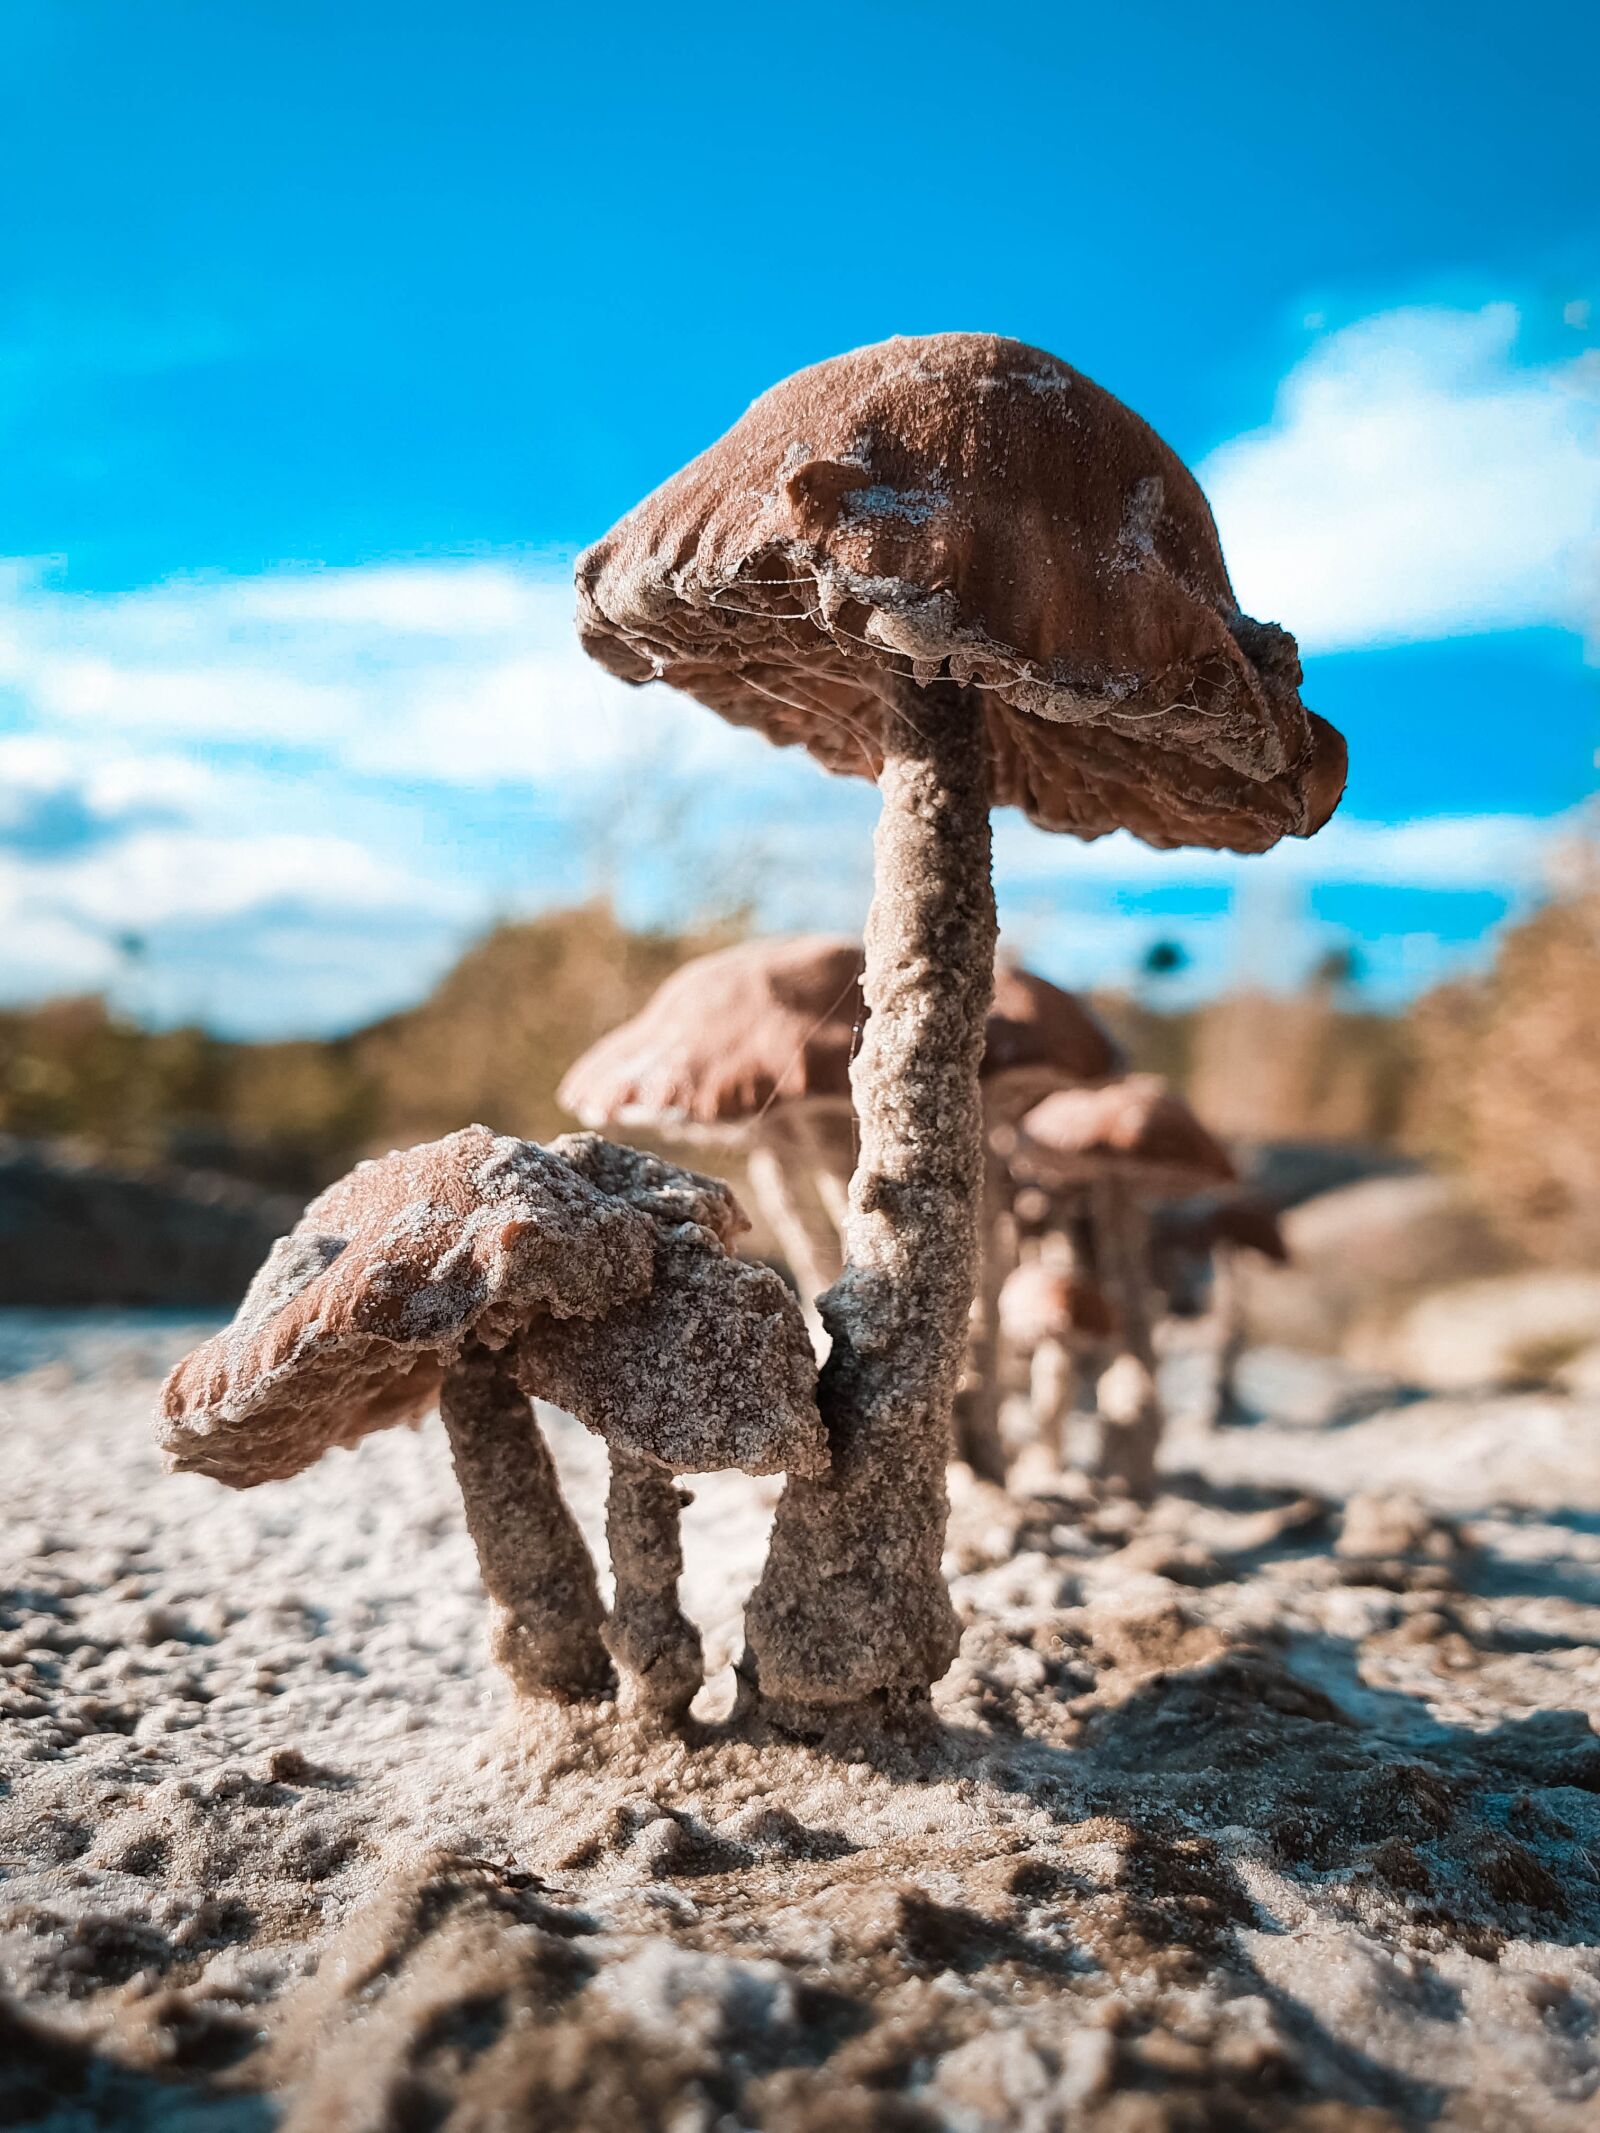 Samsung Galaxy S10+ sample photo. Mushroom, nature, autumn photography